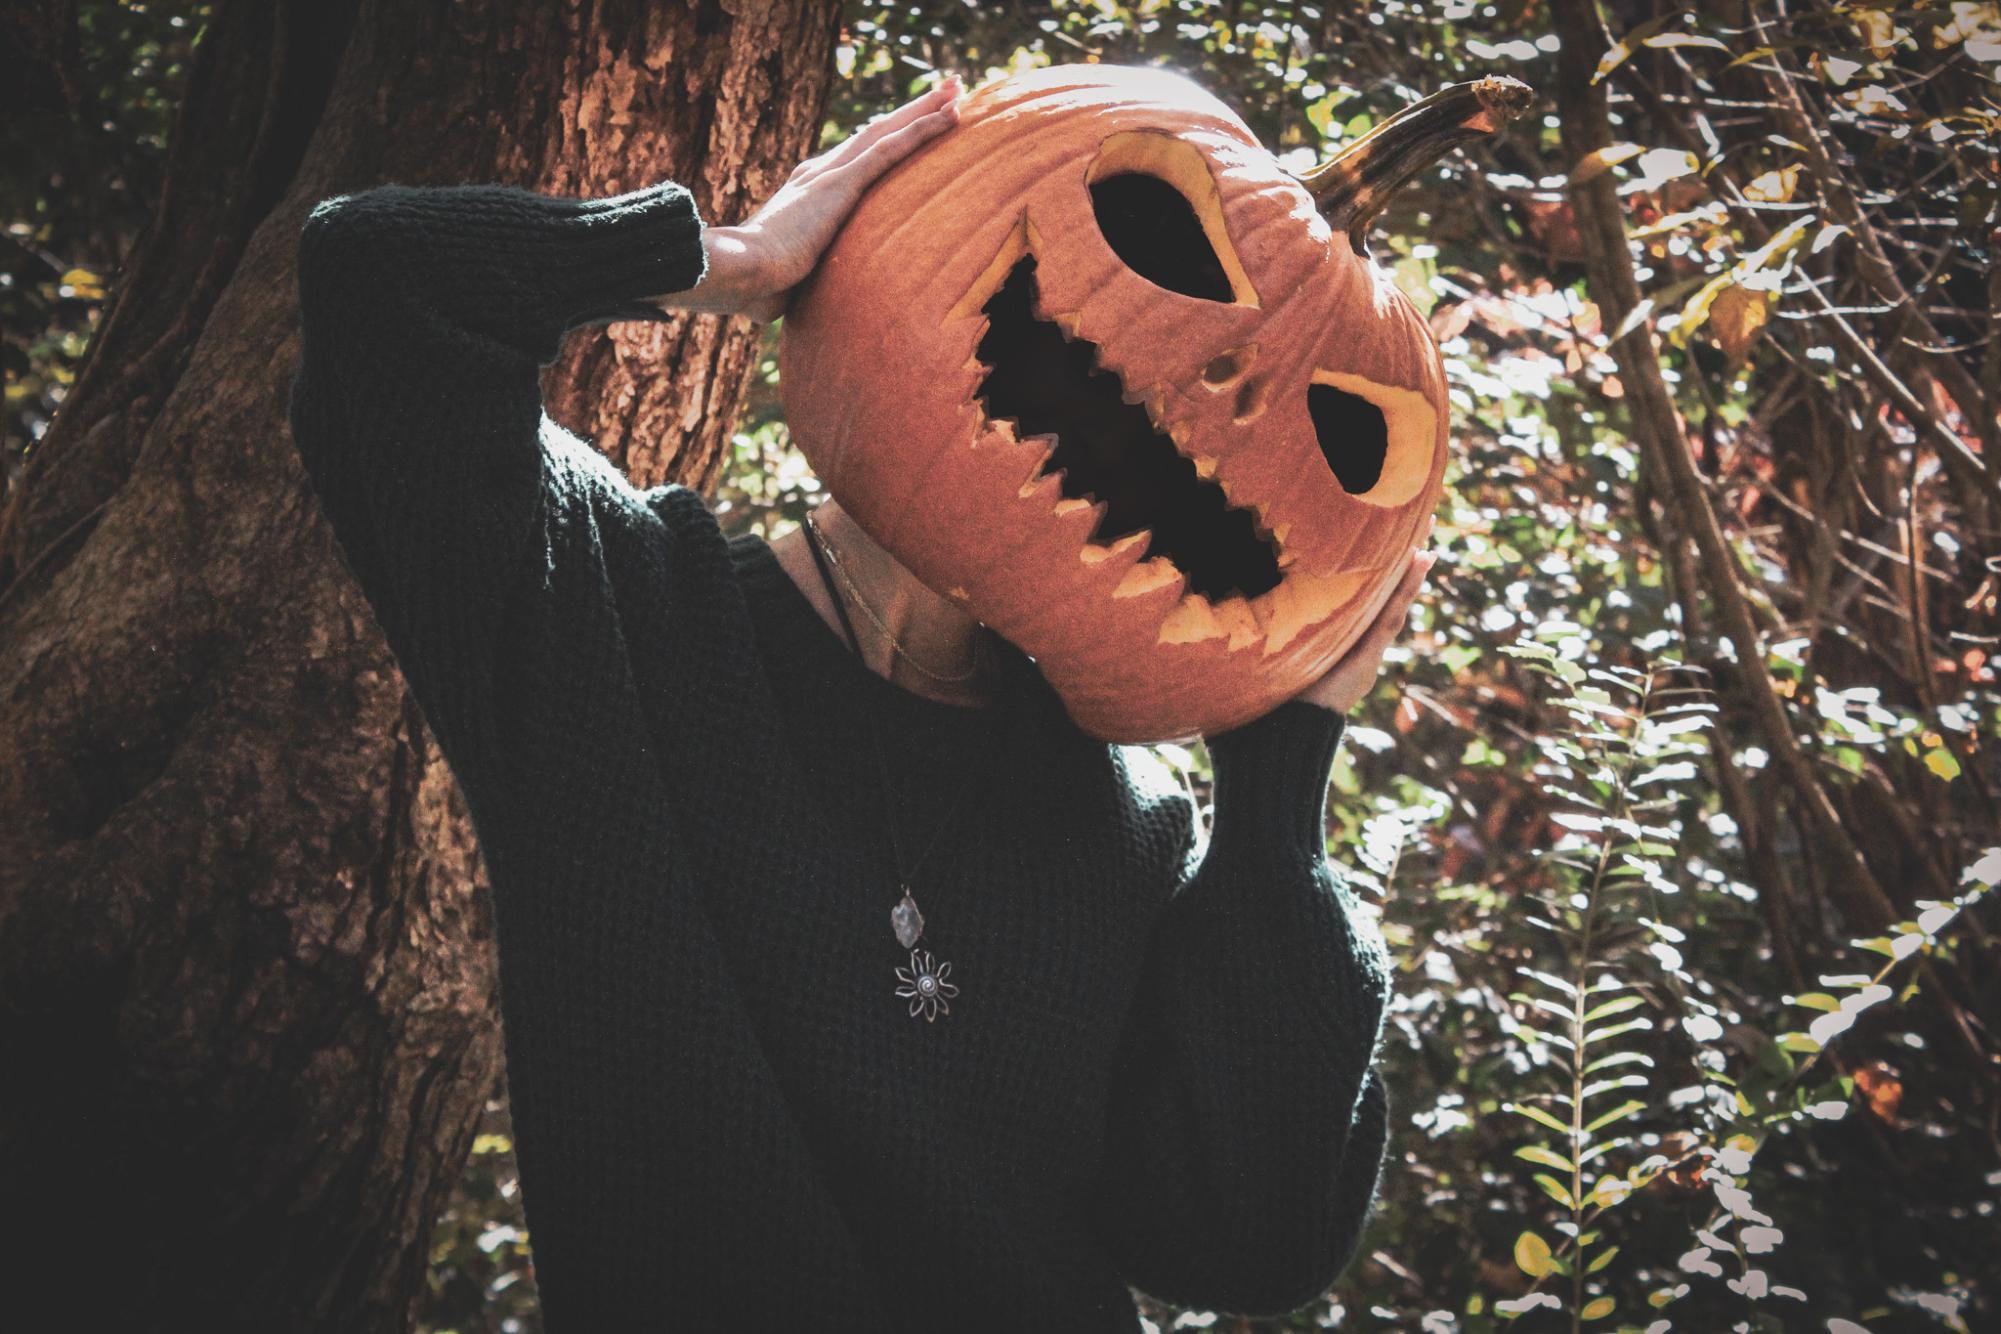 Photography+Students+Celebrate+Halloween